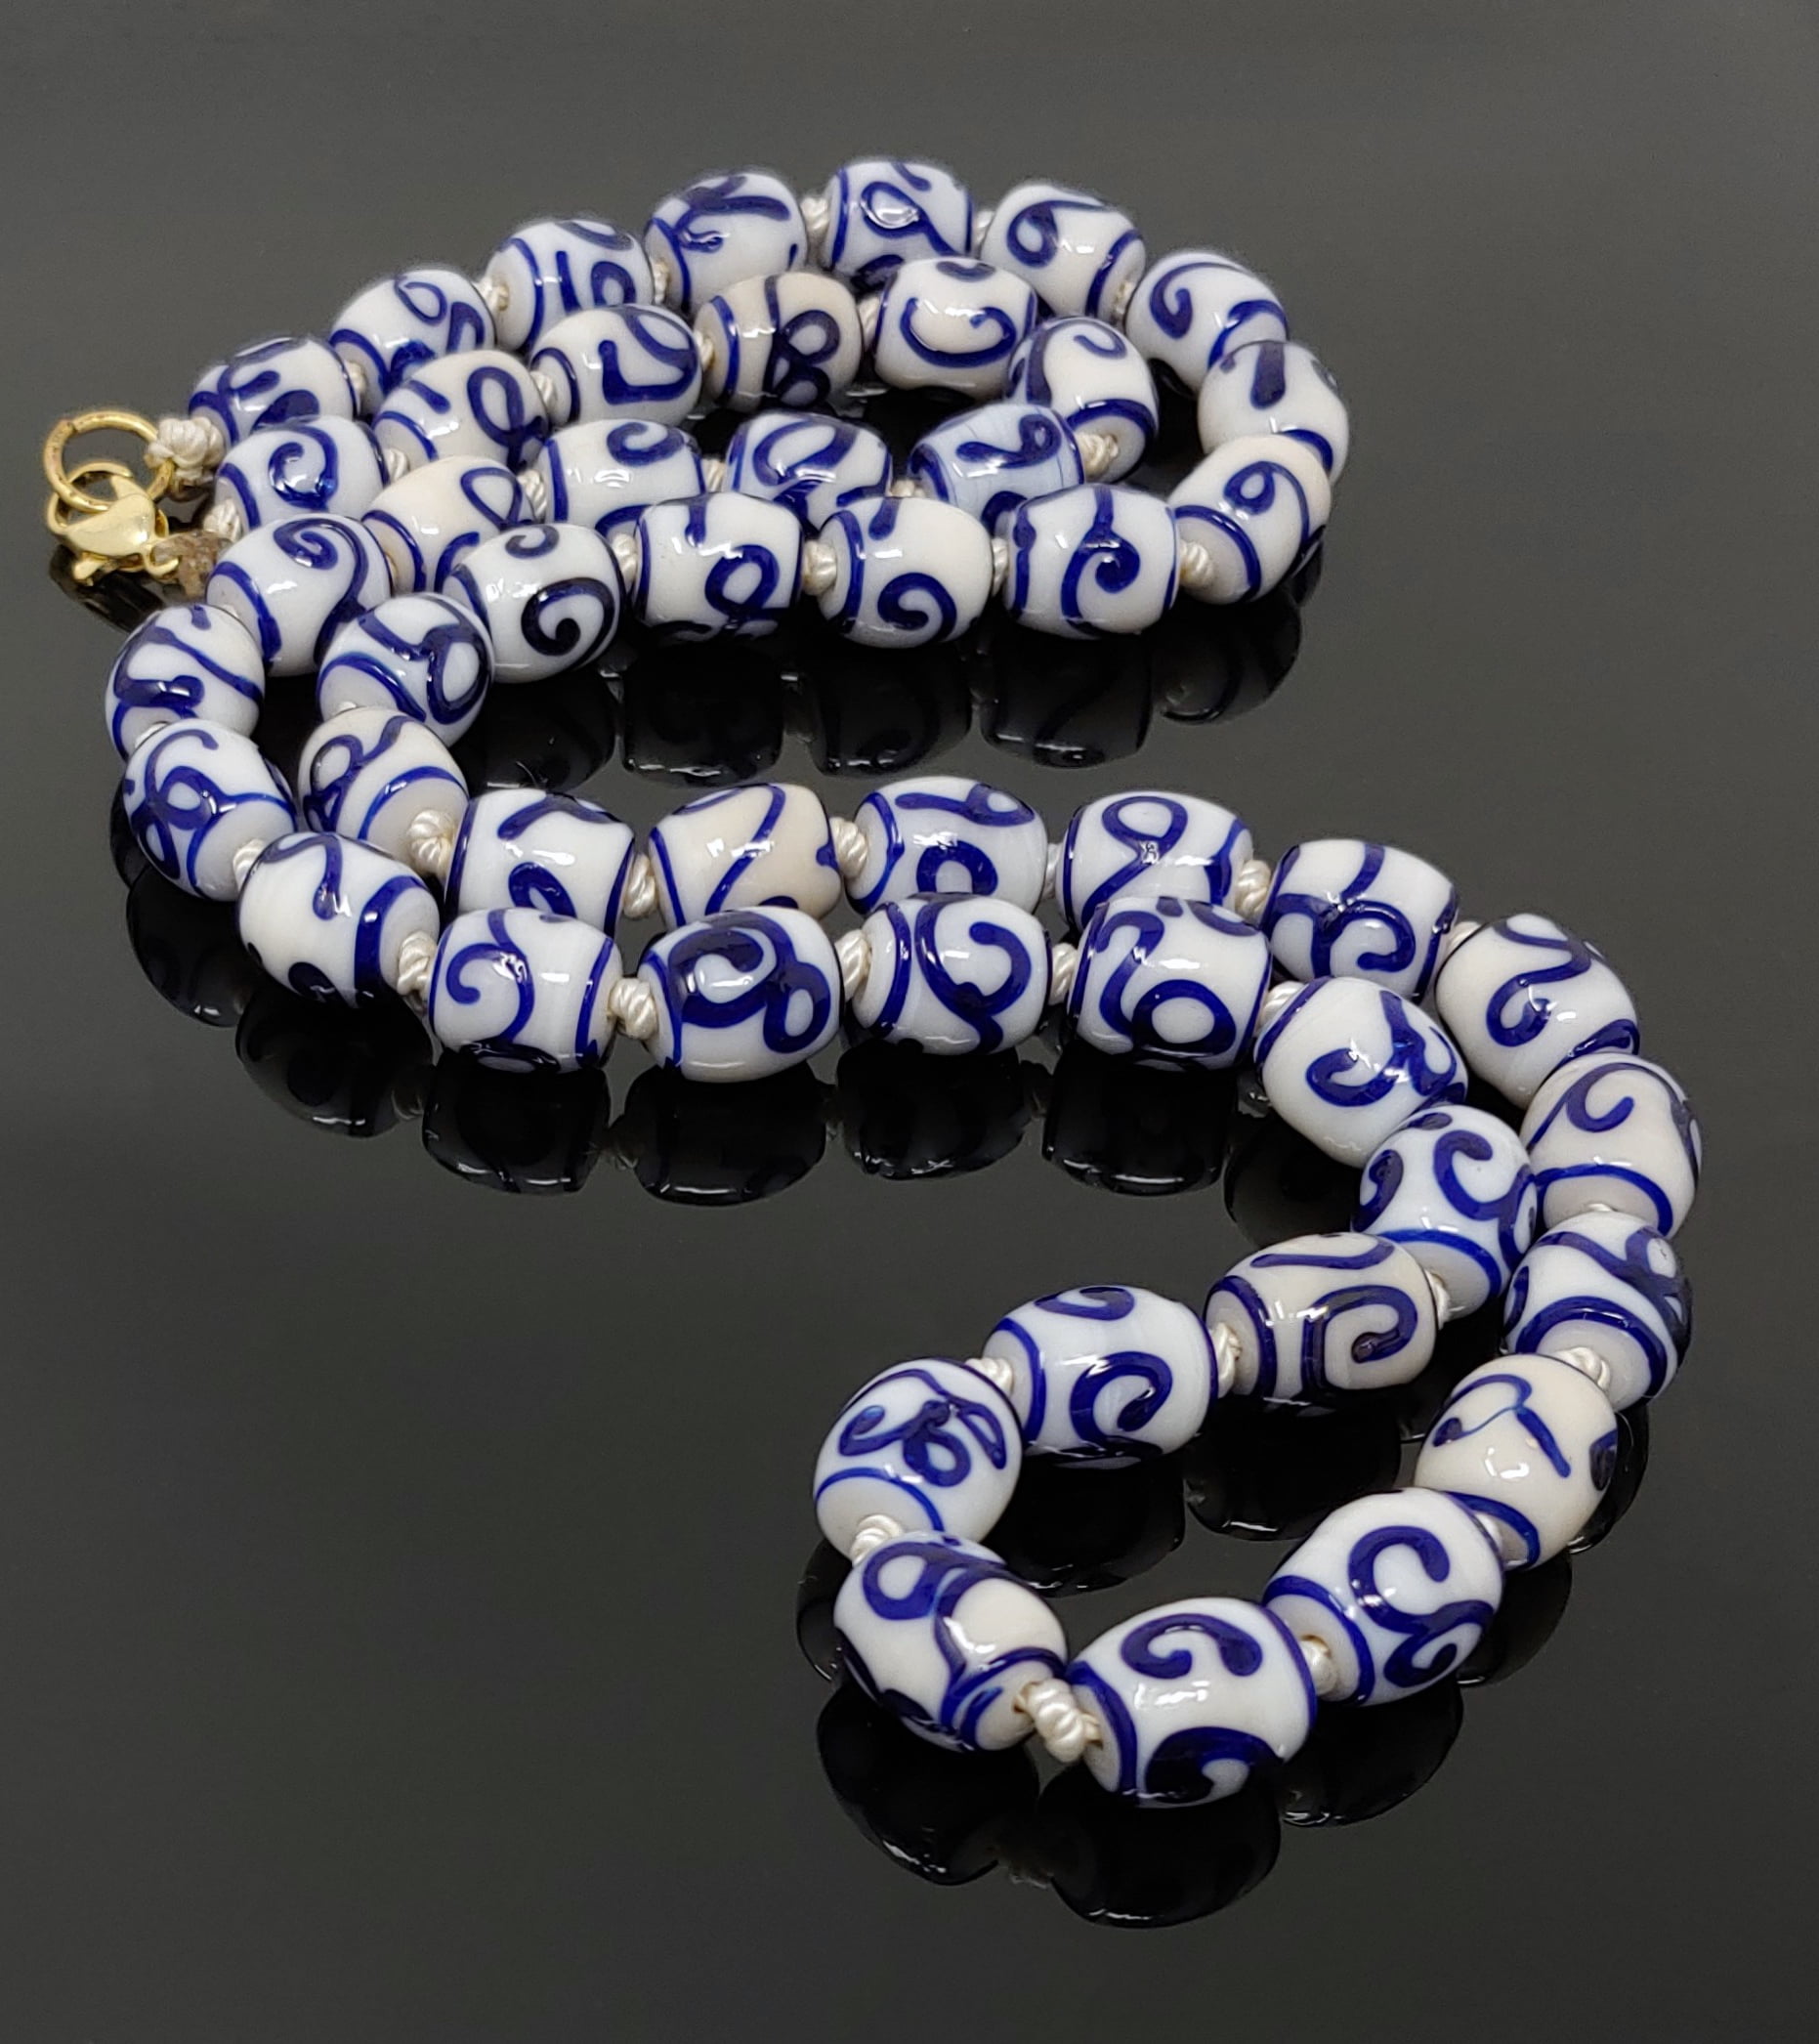 Super vintage Chinese bead necklace cloisonne & plain beads gold tone  signed SR | eBay